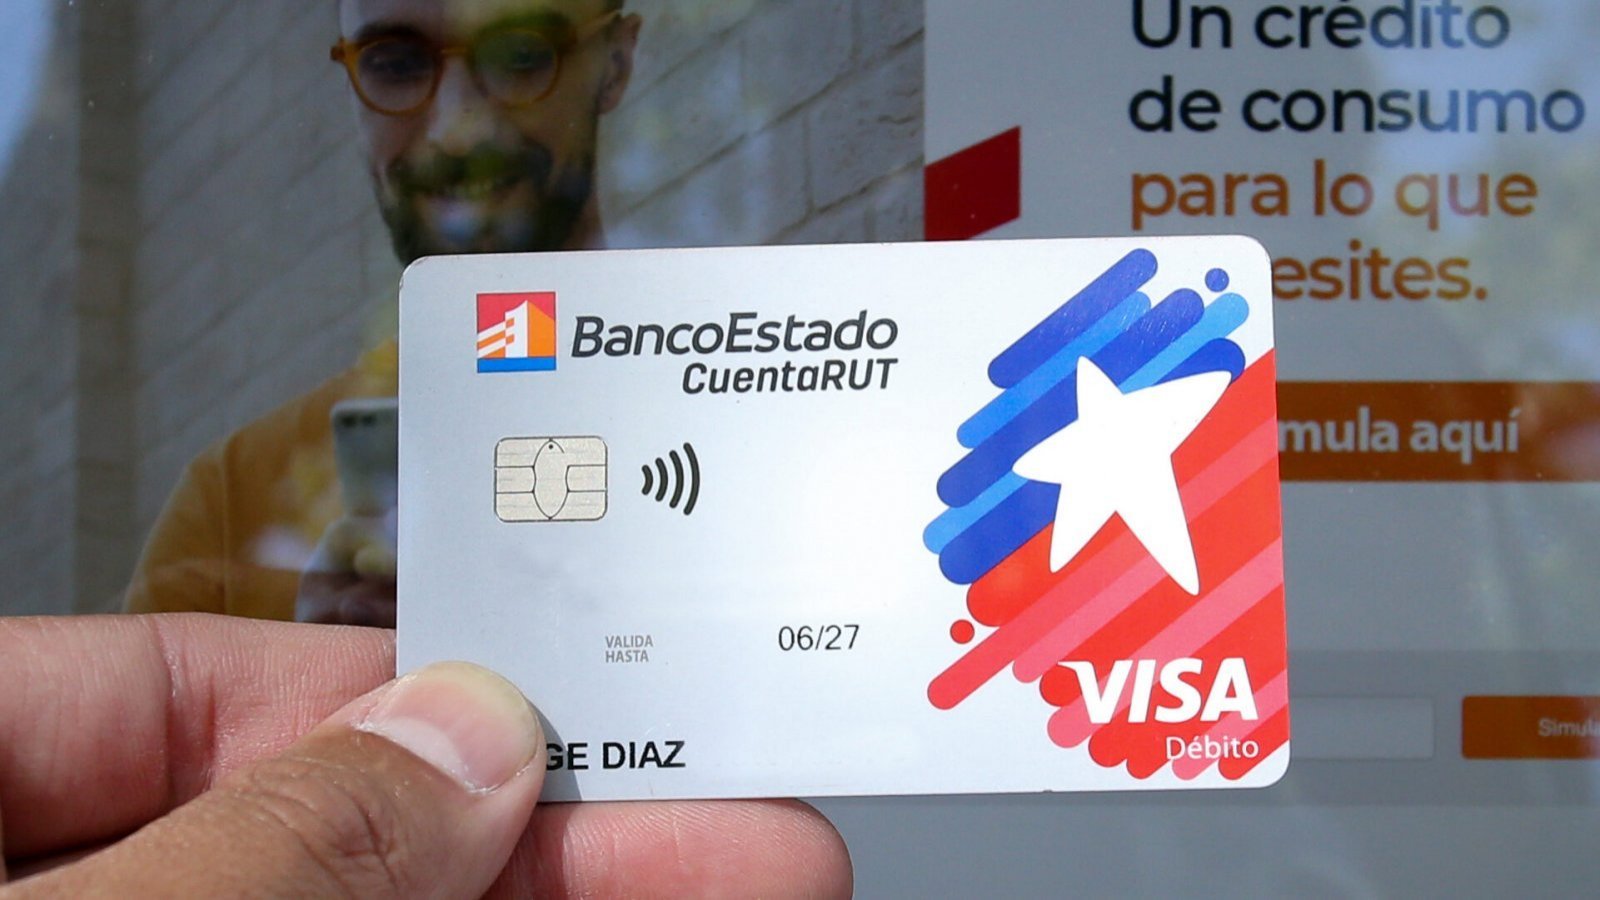 Tarjeta CuentaRUT Visa de BancoEstado